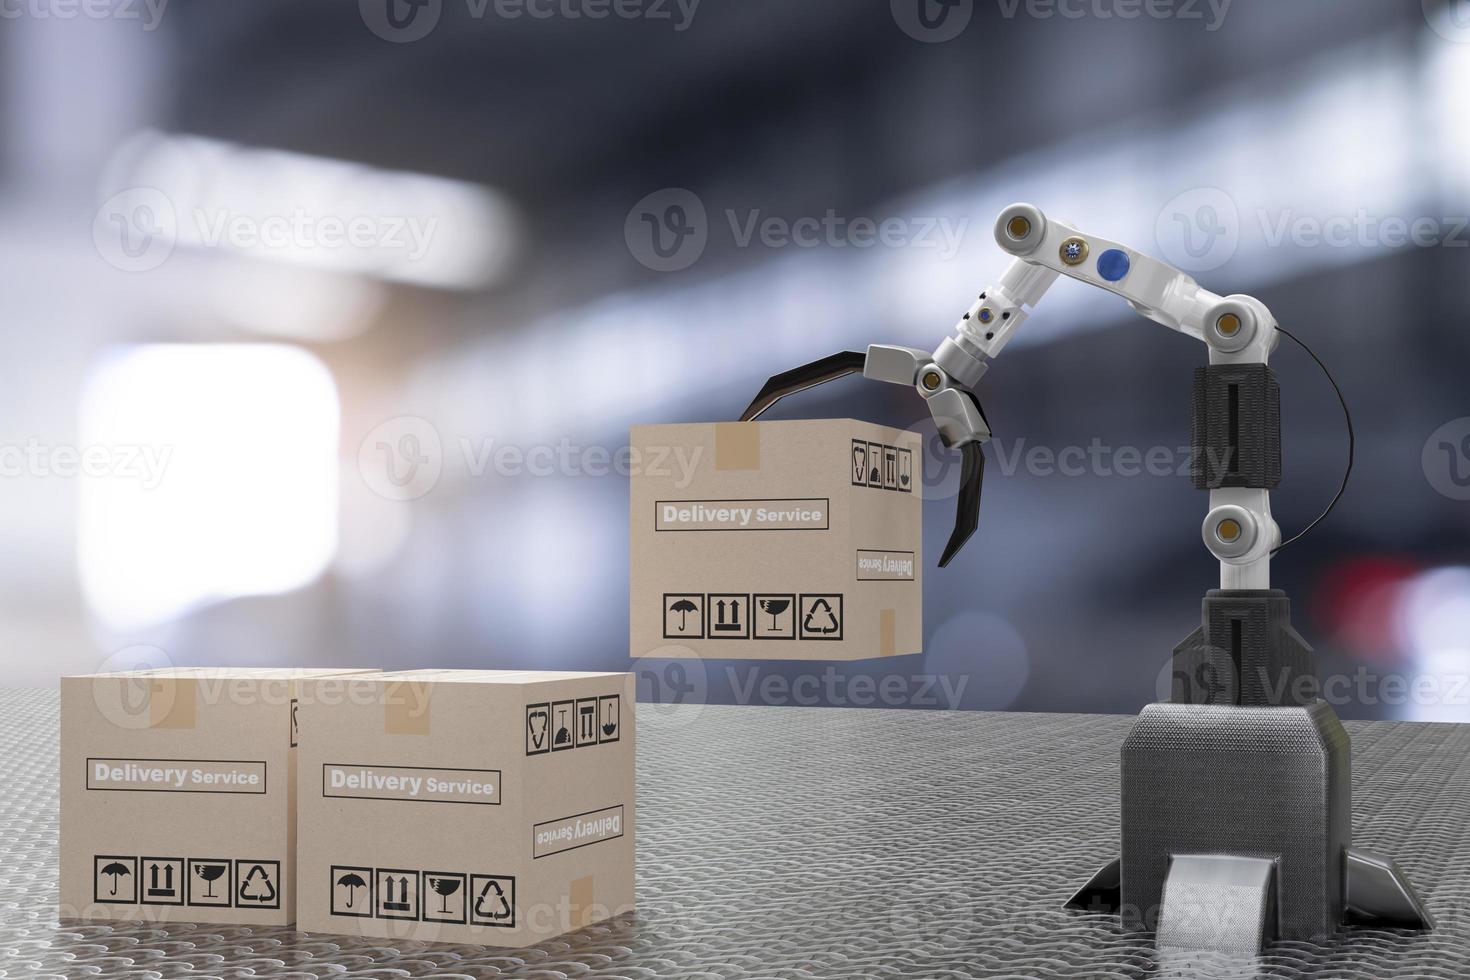 Handroboter Cyber Zukunft futuristisch Humanoid Hold Box Produkttechnologie 3D-Rendering Geräteprüfung für die Industrie Inspektion Inspektor Transport Wartung Roboter Service-Technologie High-Tech-Industrie foto